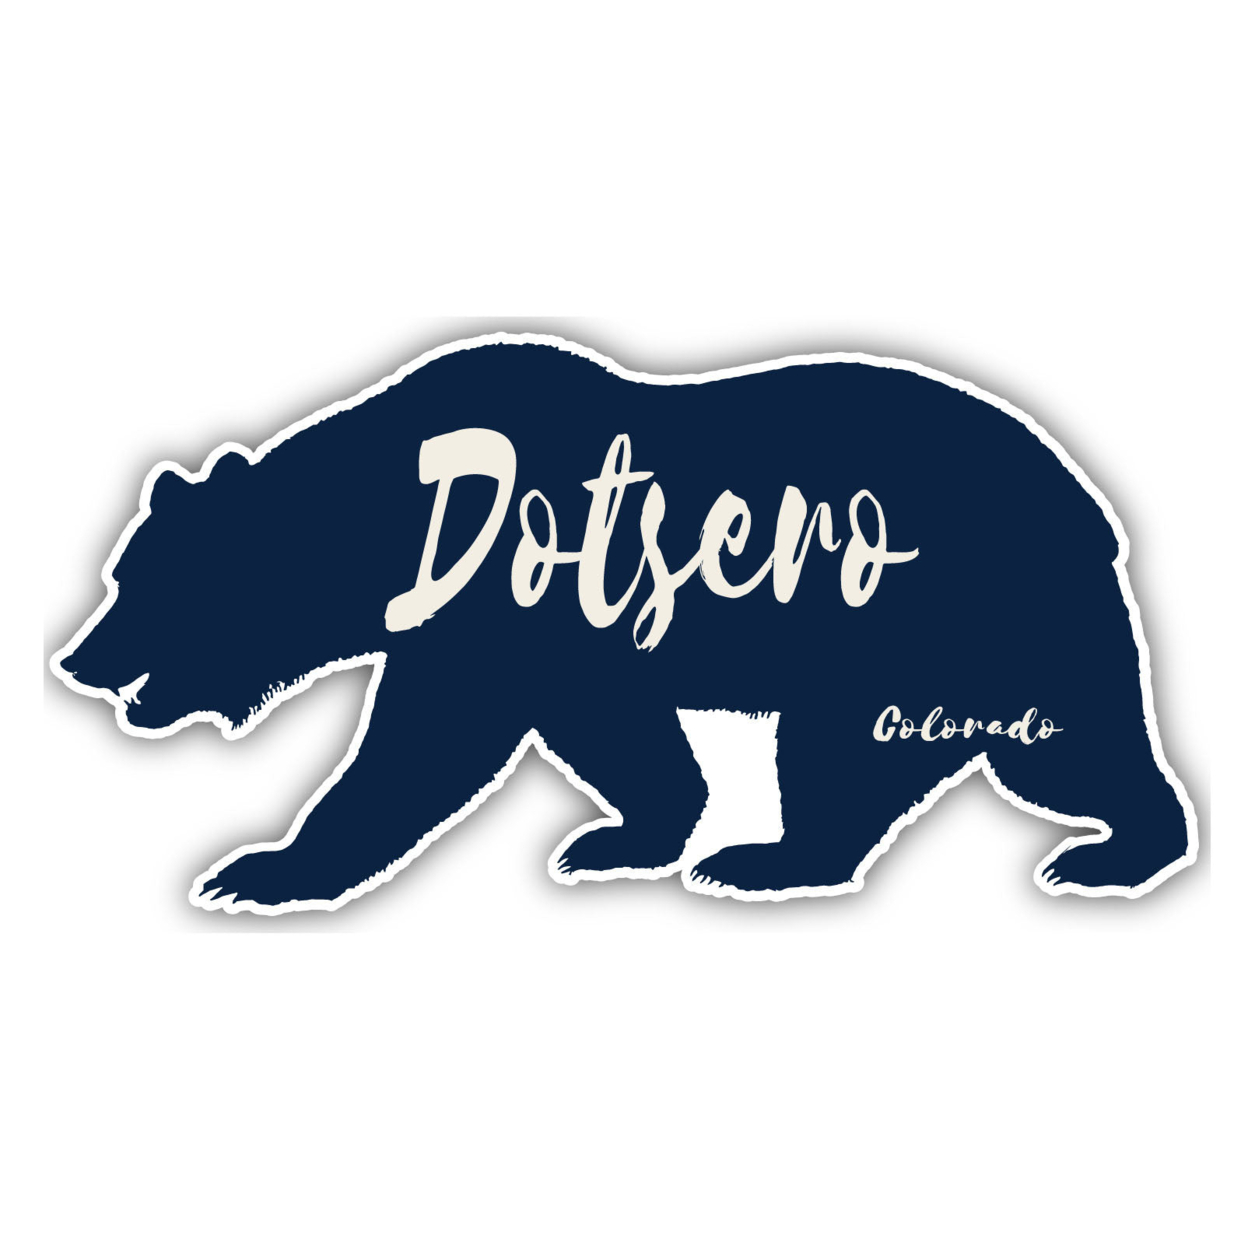 Dotsero Colorado Souvenir Decorative Stickers (Choose Theme And Size) - 4-Pack, 4-Inch, Bear